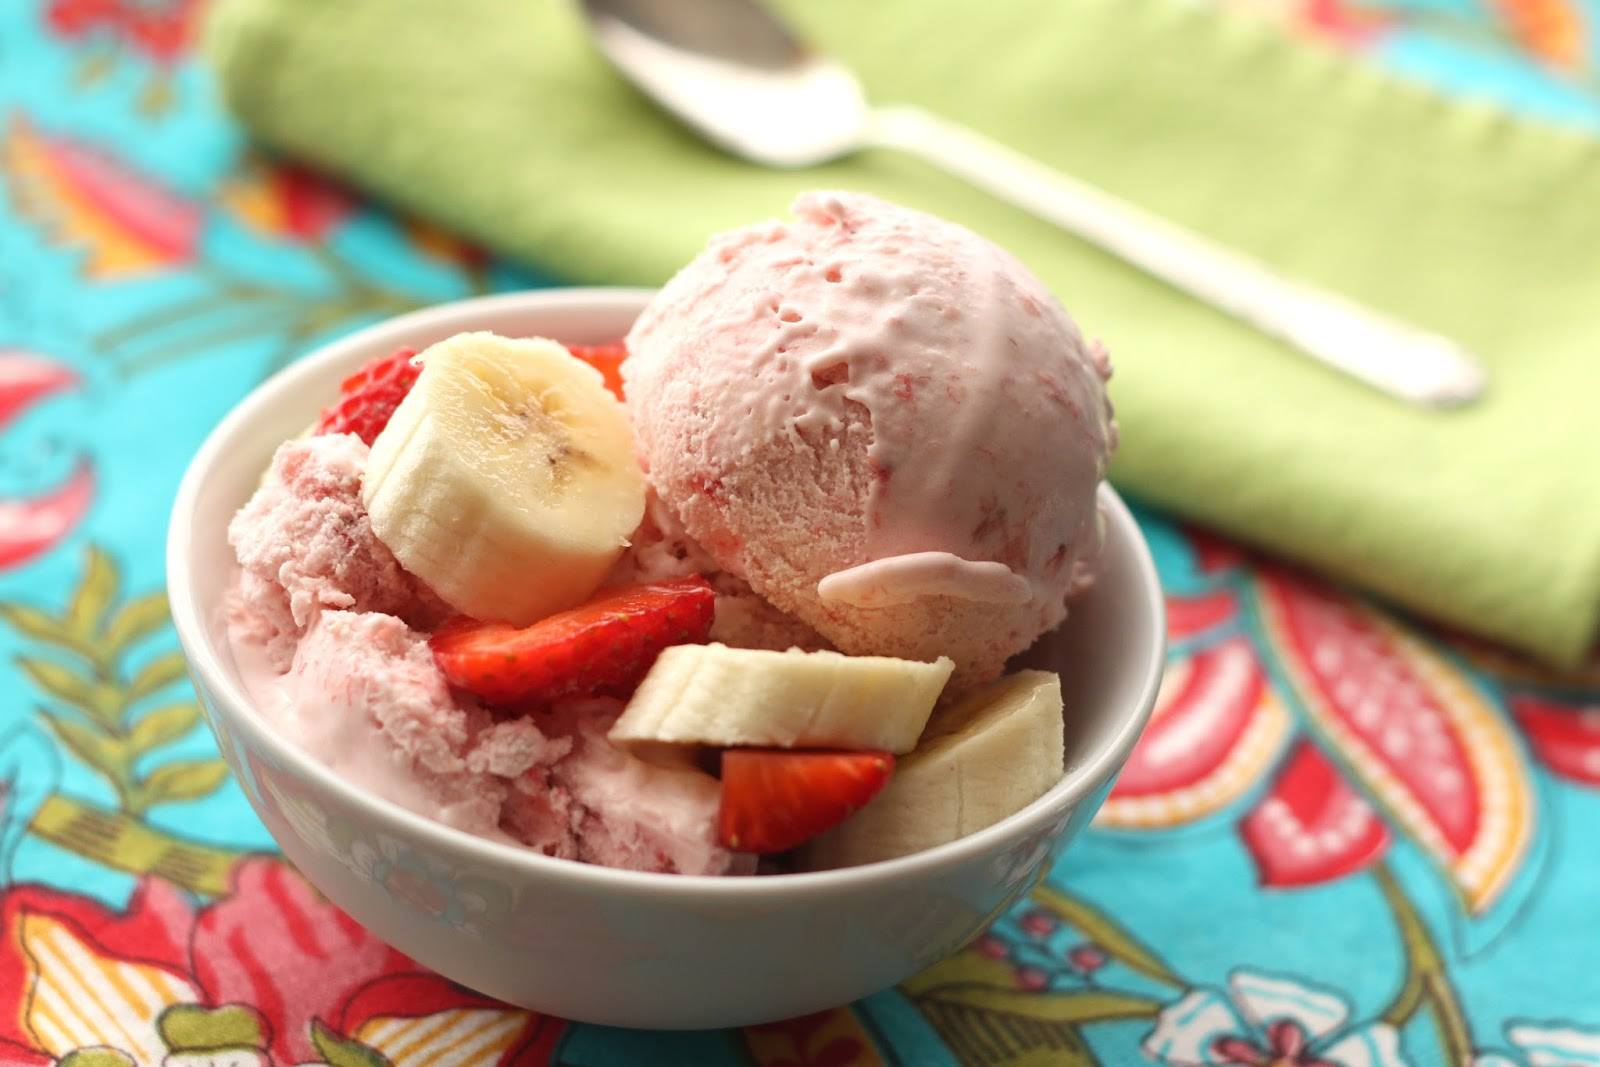 strawberry banana ice cream.jpg - 118.69 kB.